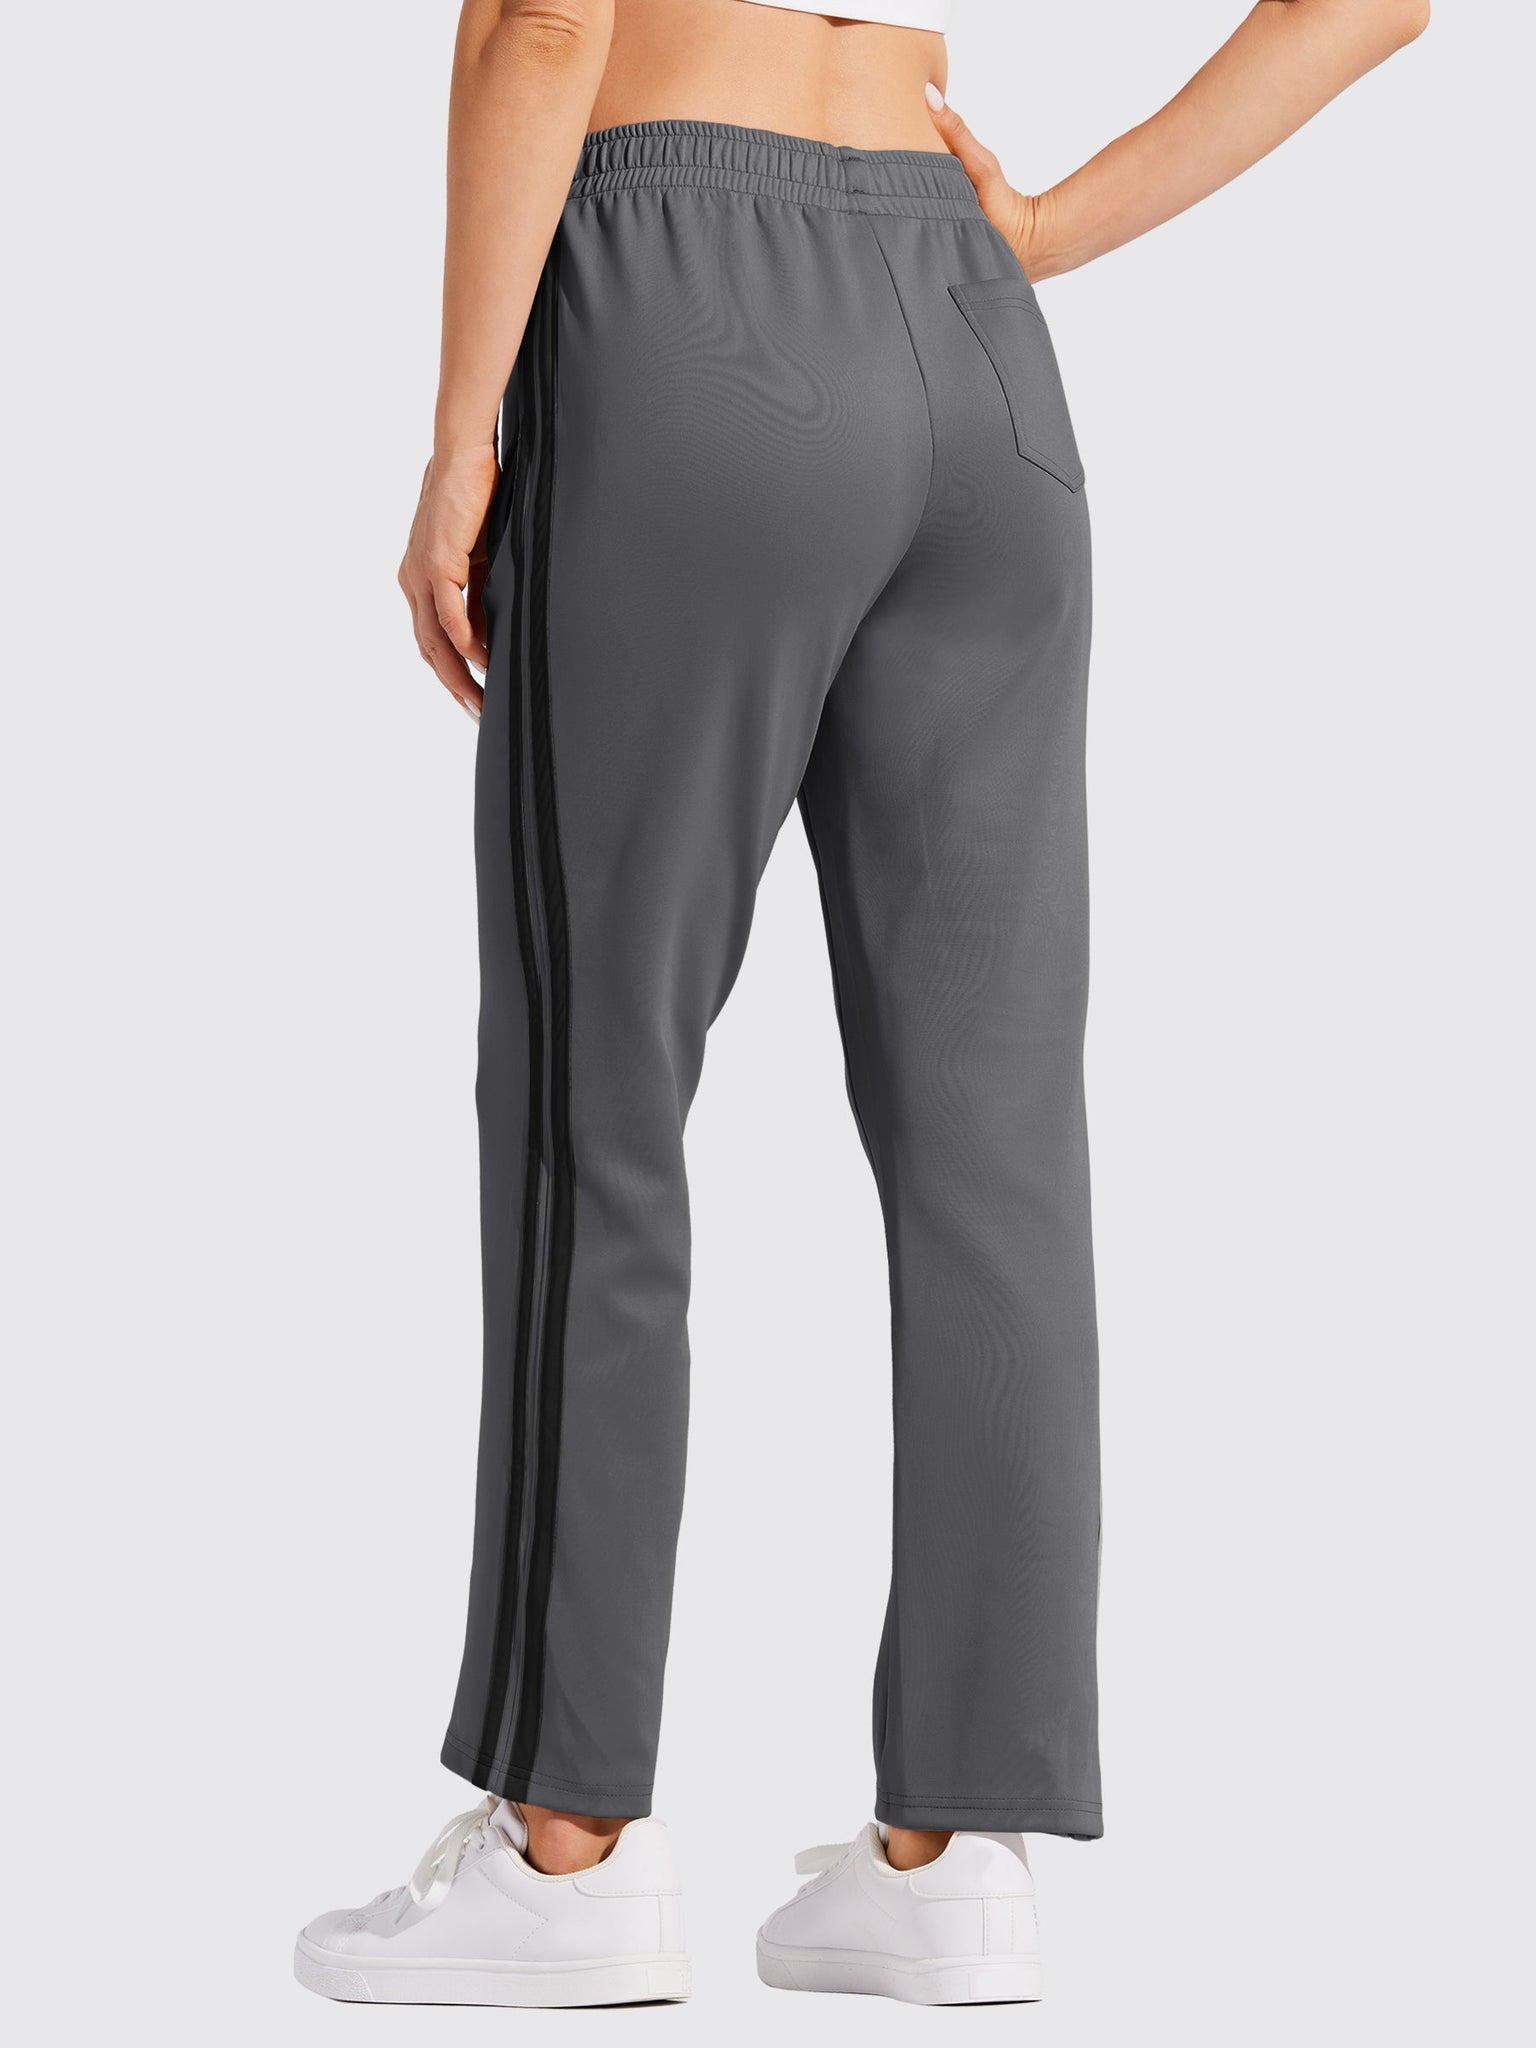 Ladies Track Pants ( Printed Ankle Pant ) at Rs 260/piece